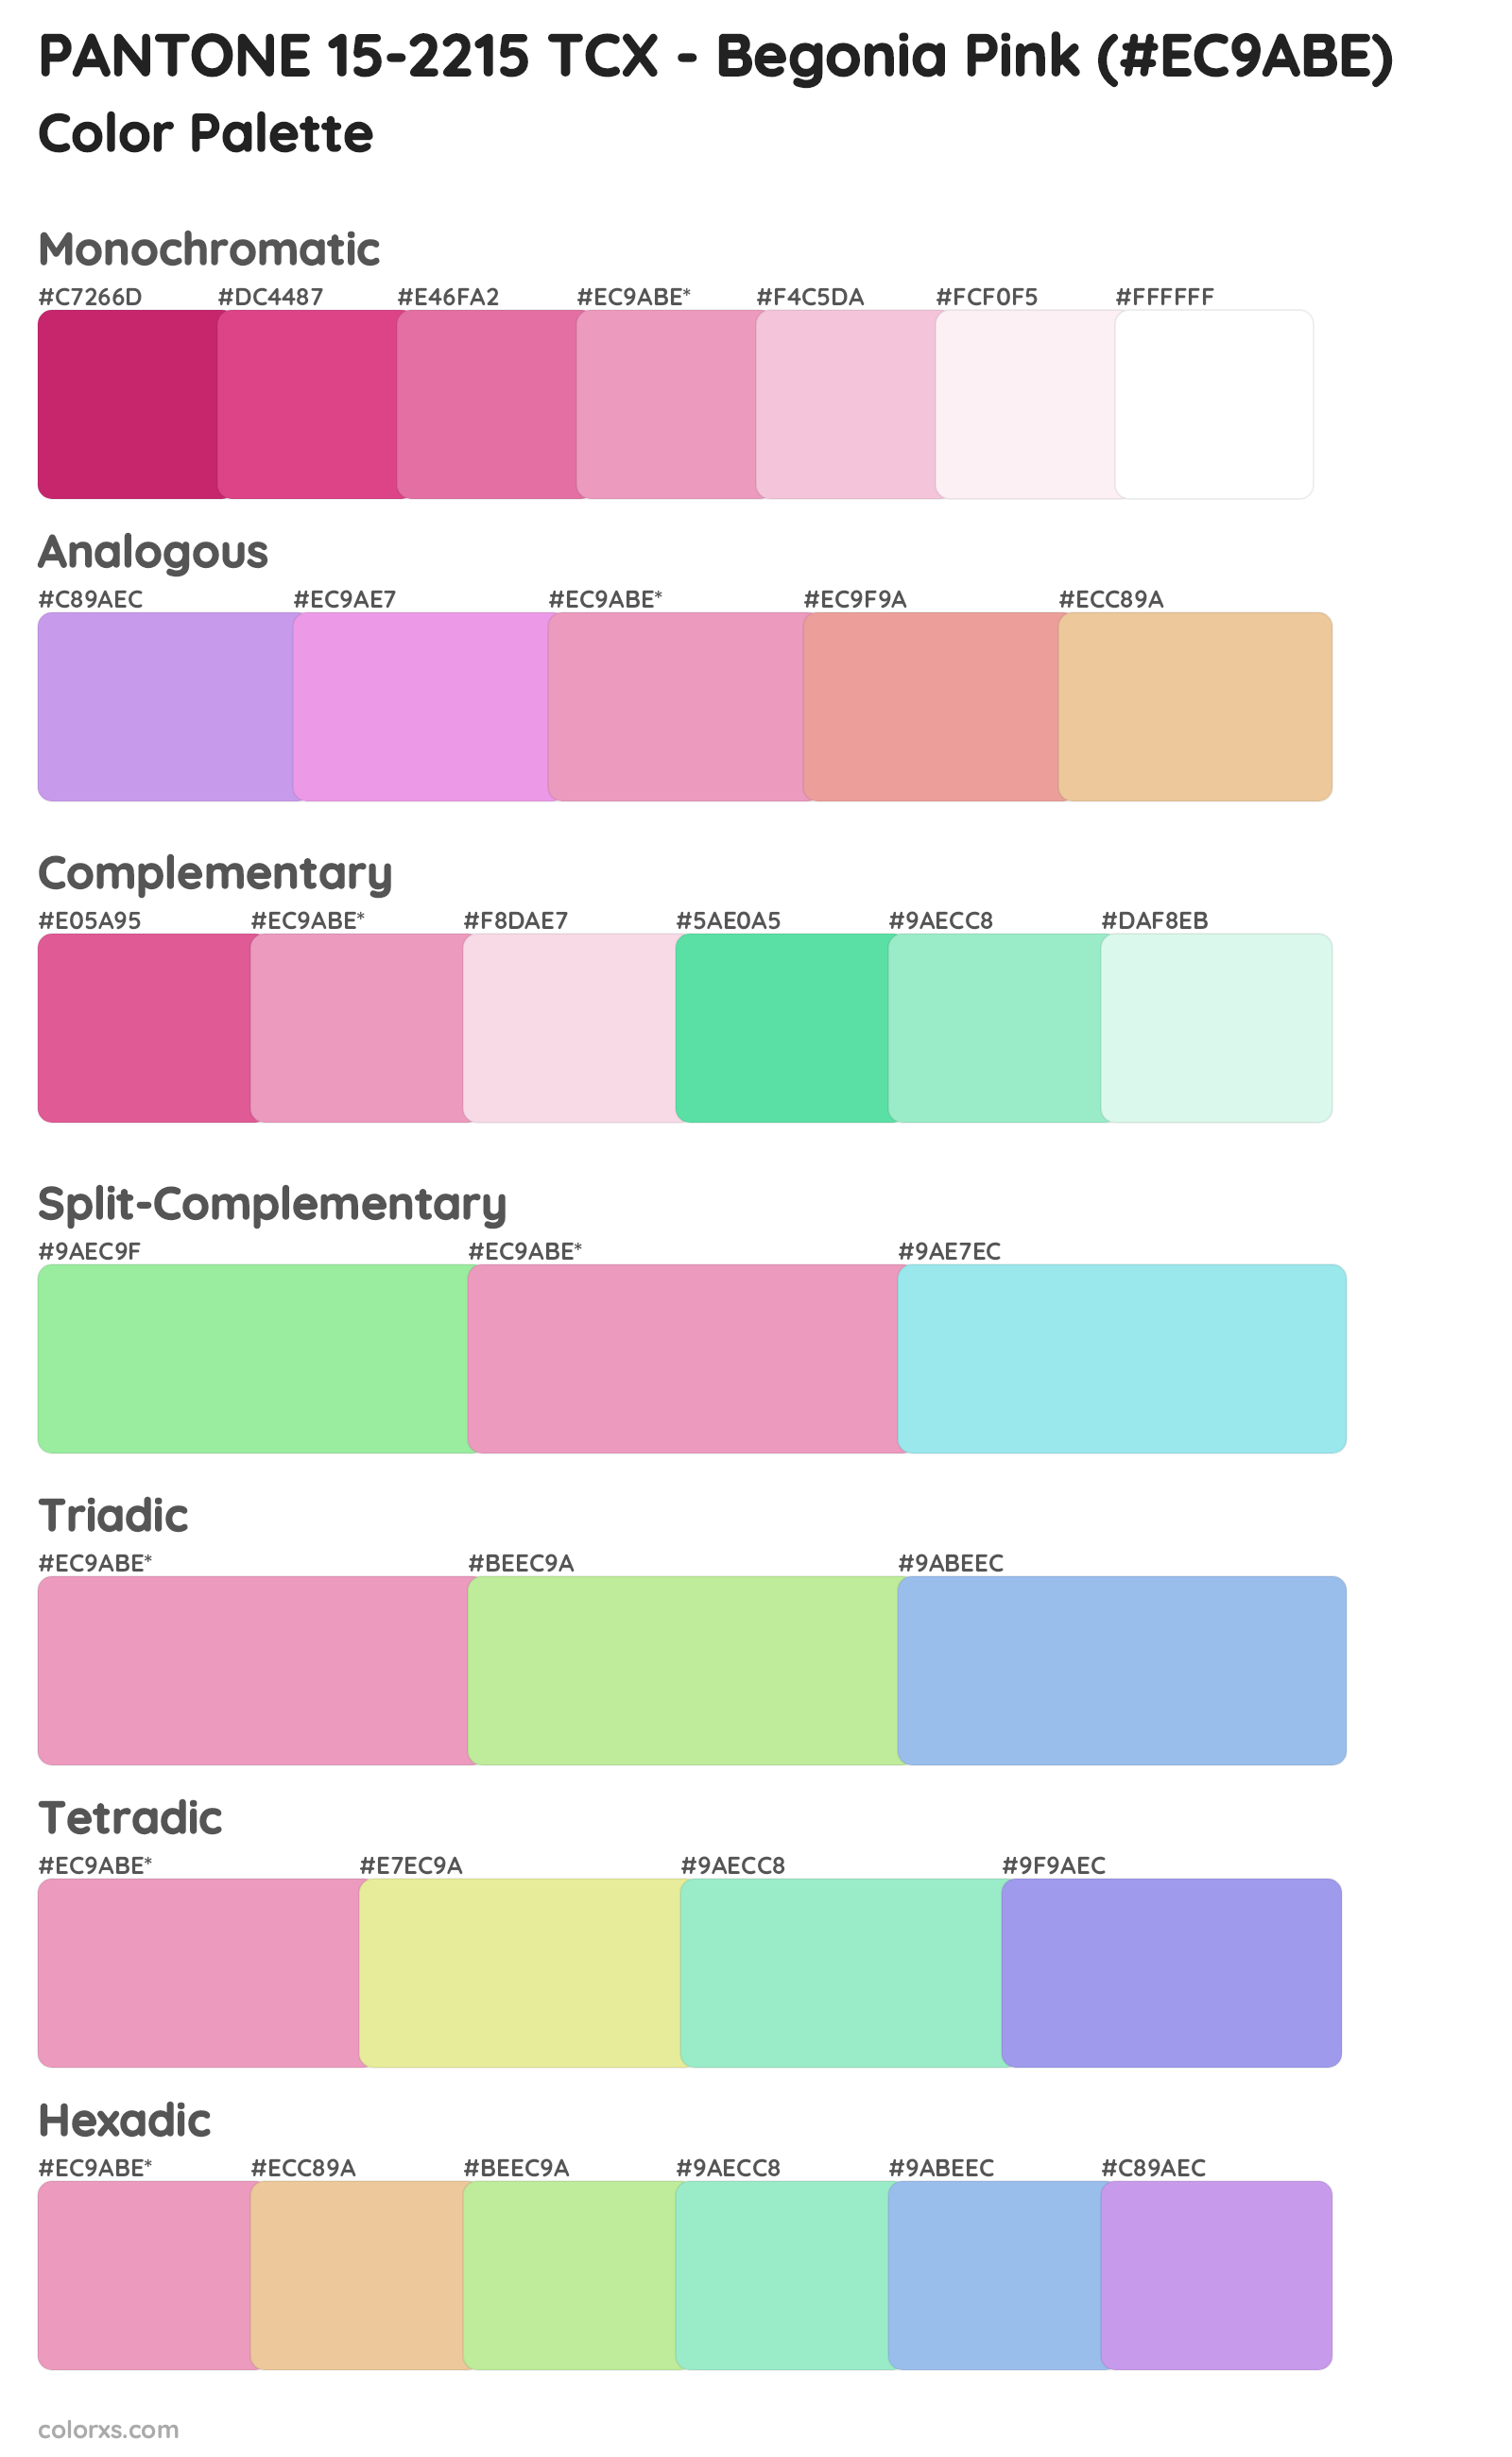 PANTONE 15-2215 TCX - Begonia Pink Color Scheme Palettes